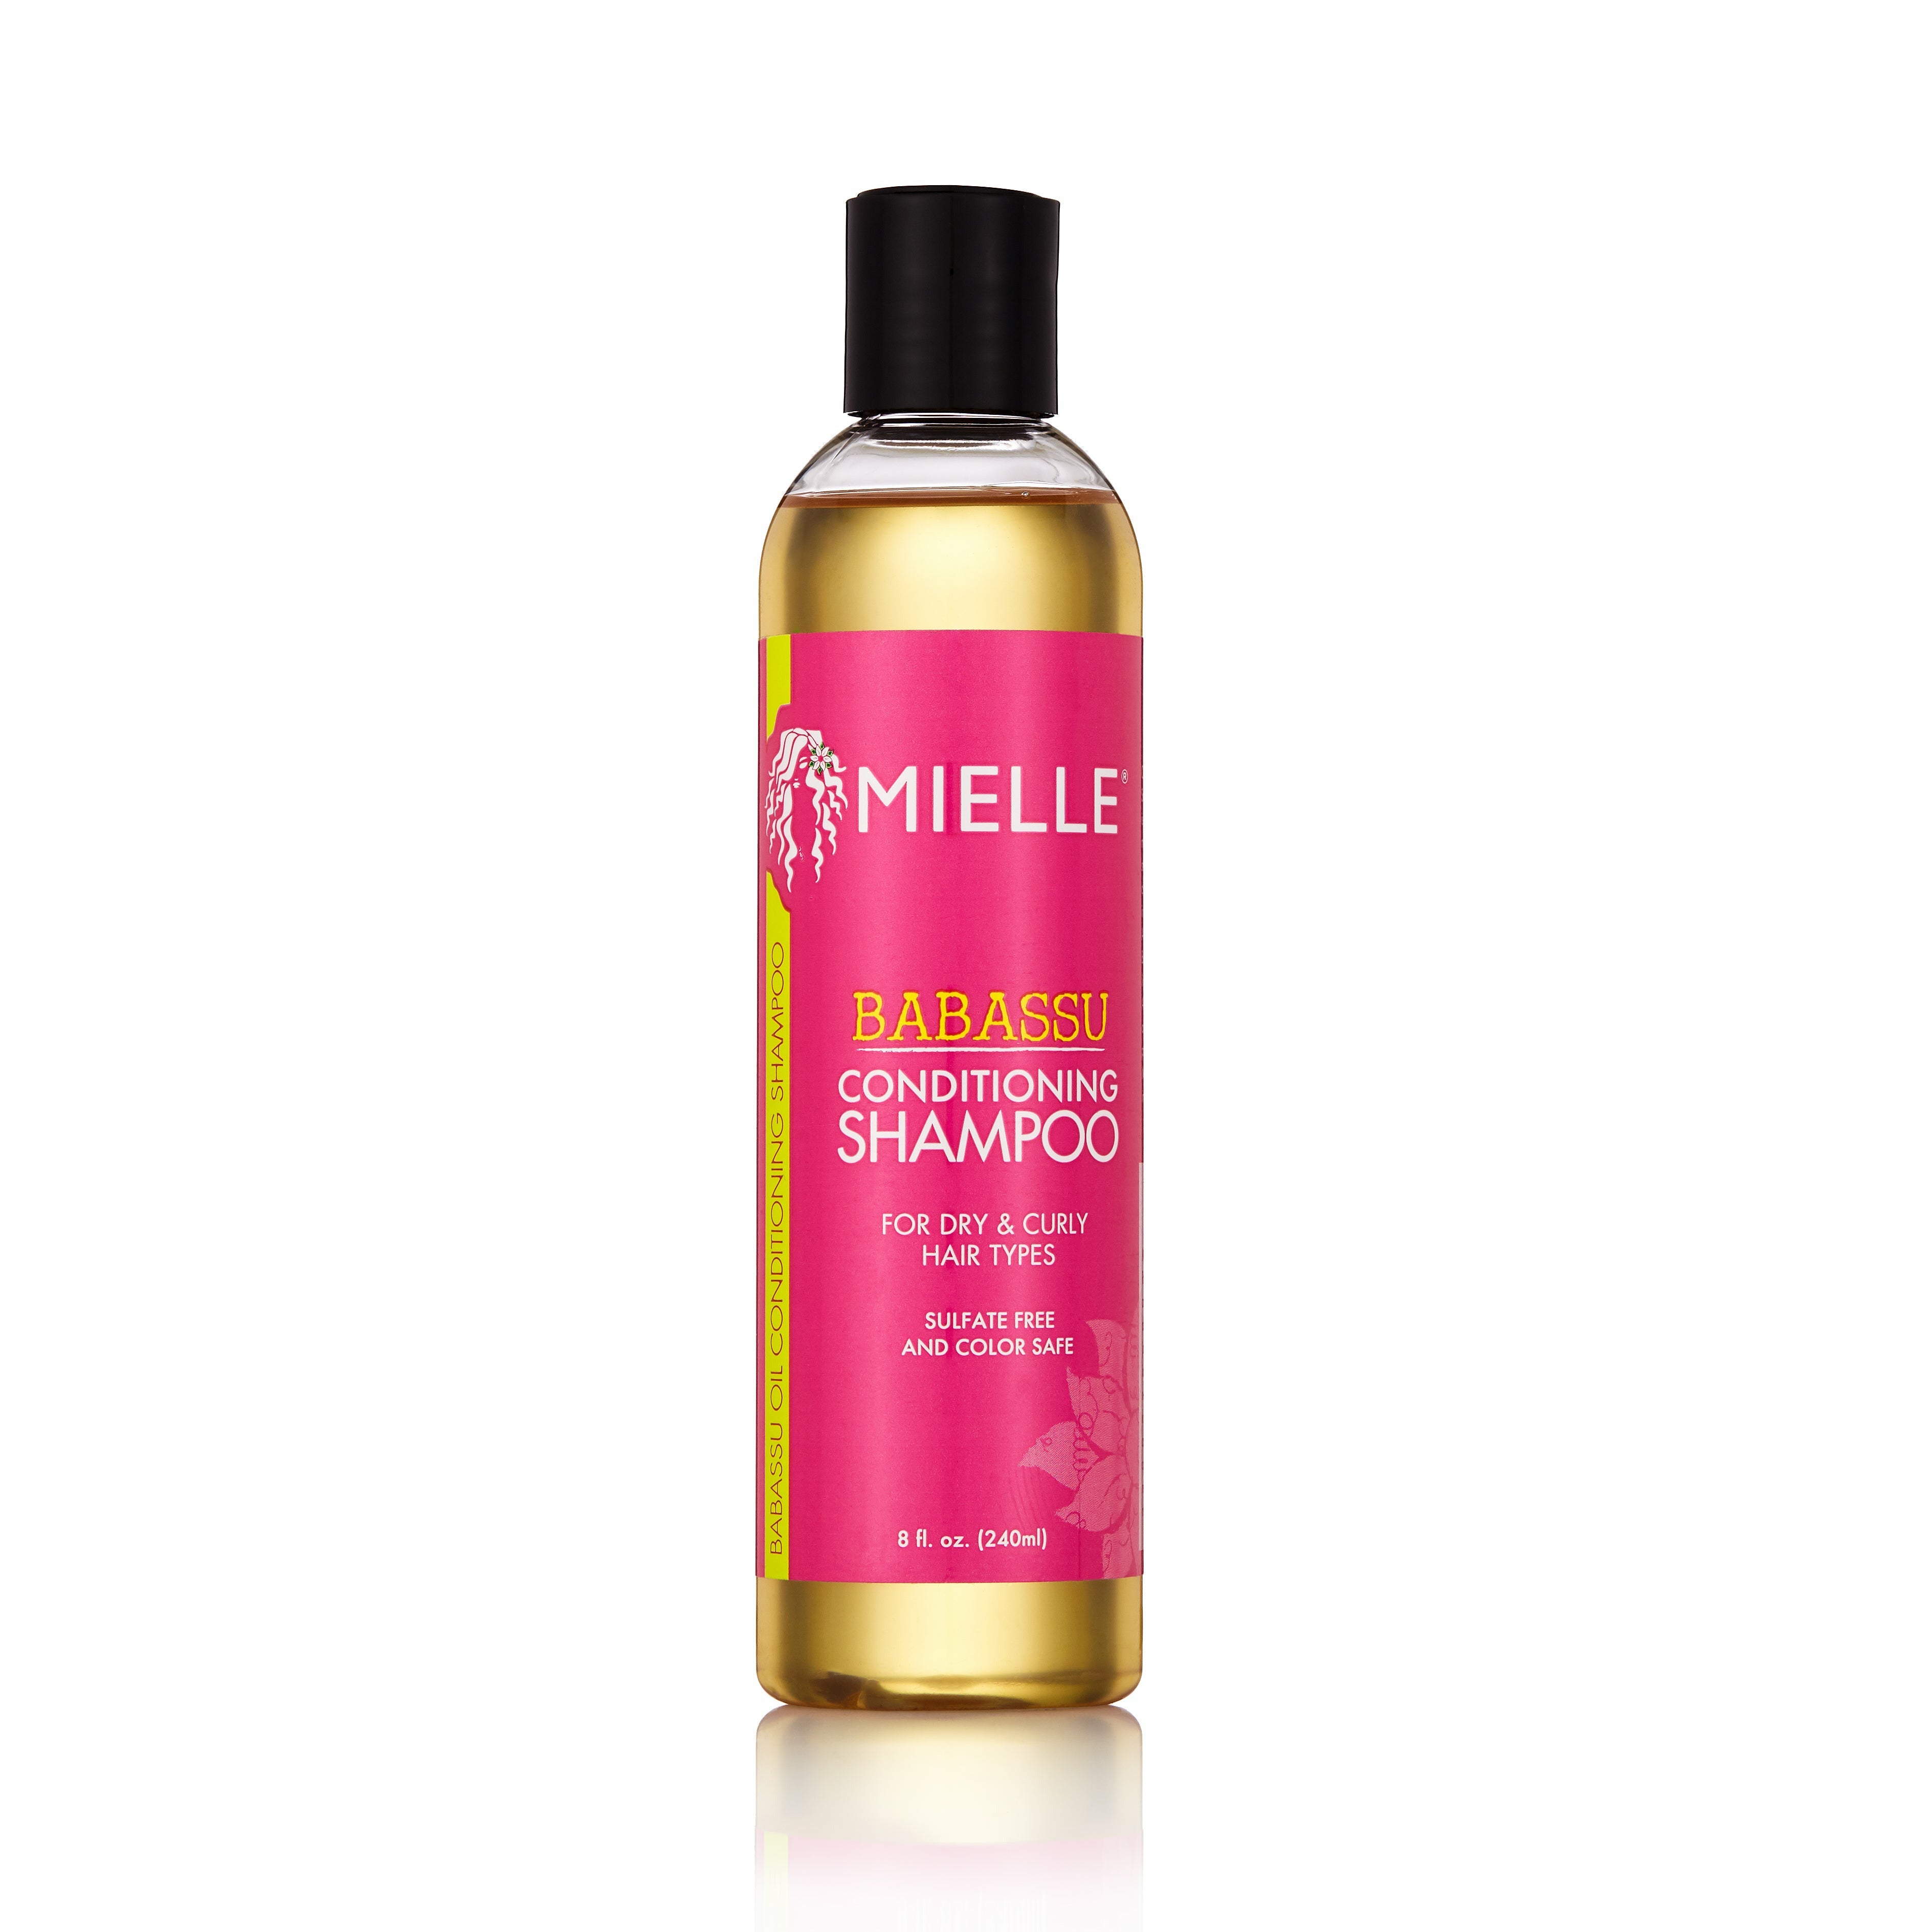 Mielle Babassu Conditioning Shampoo